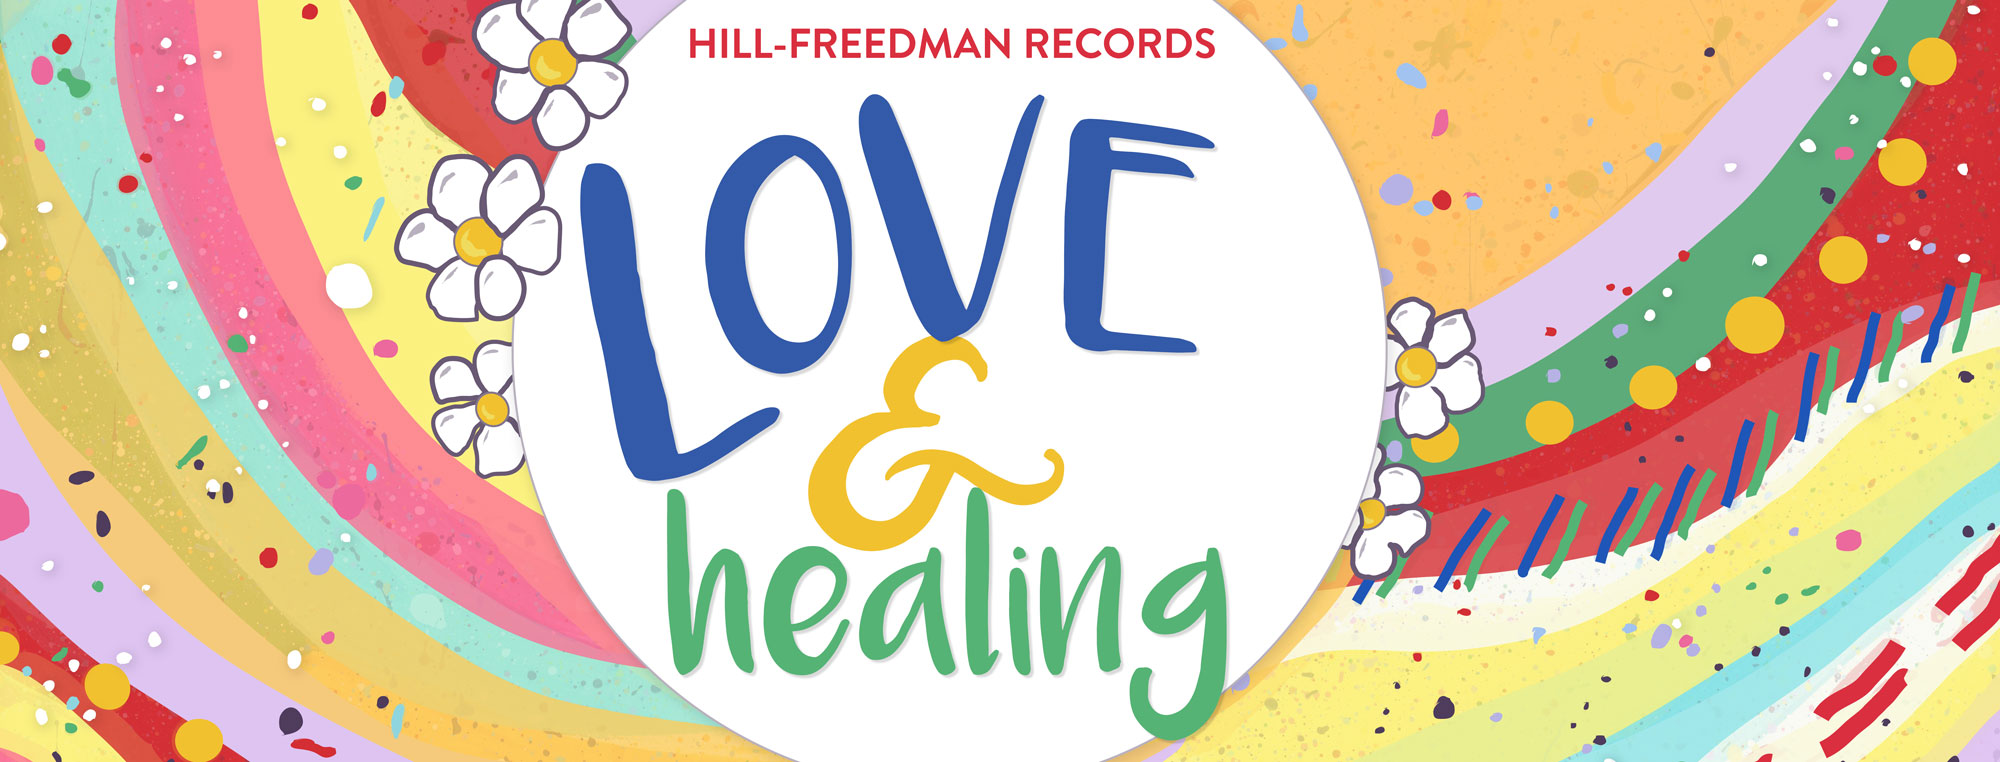 Love Healing Album Cover art